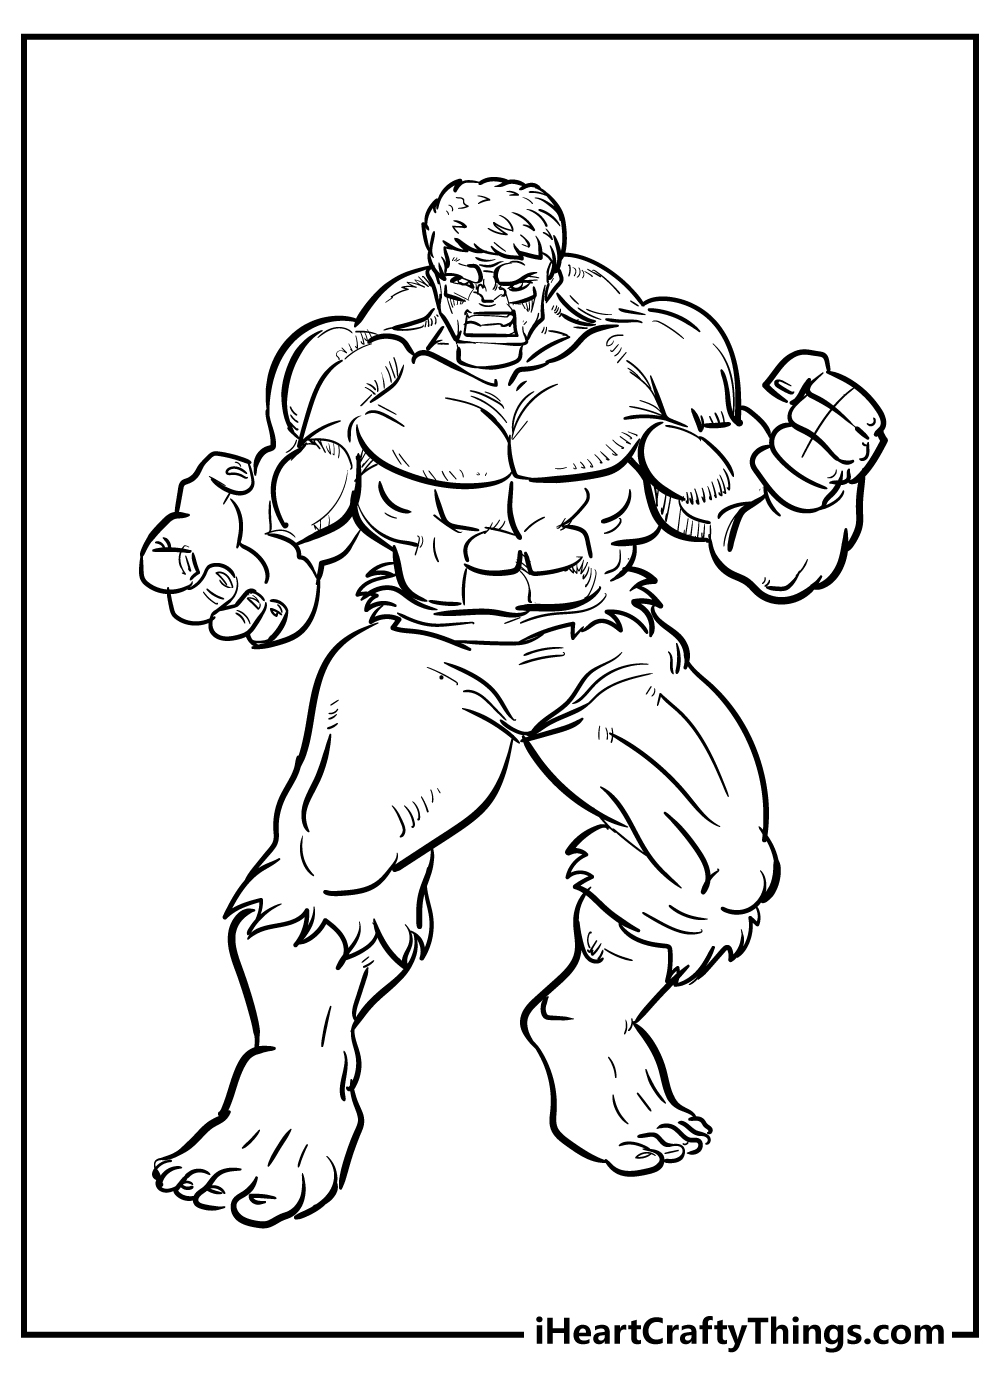 Hulk coloring pages free printables